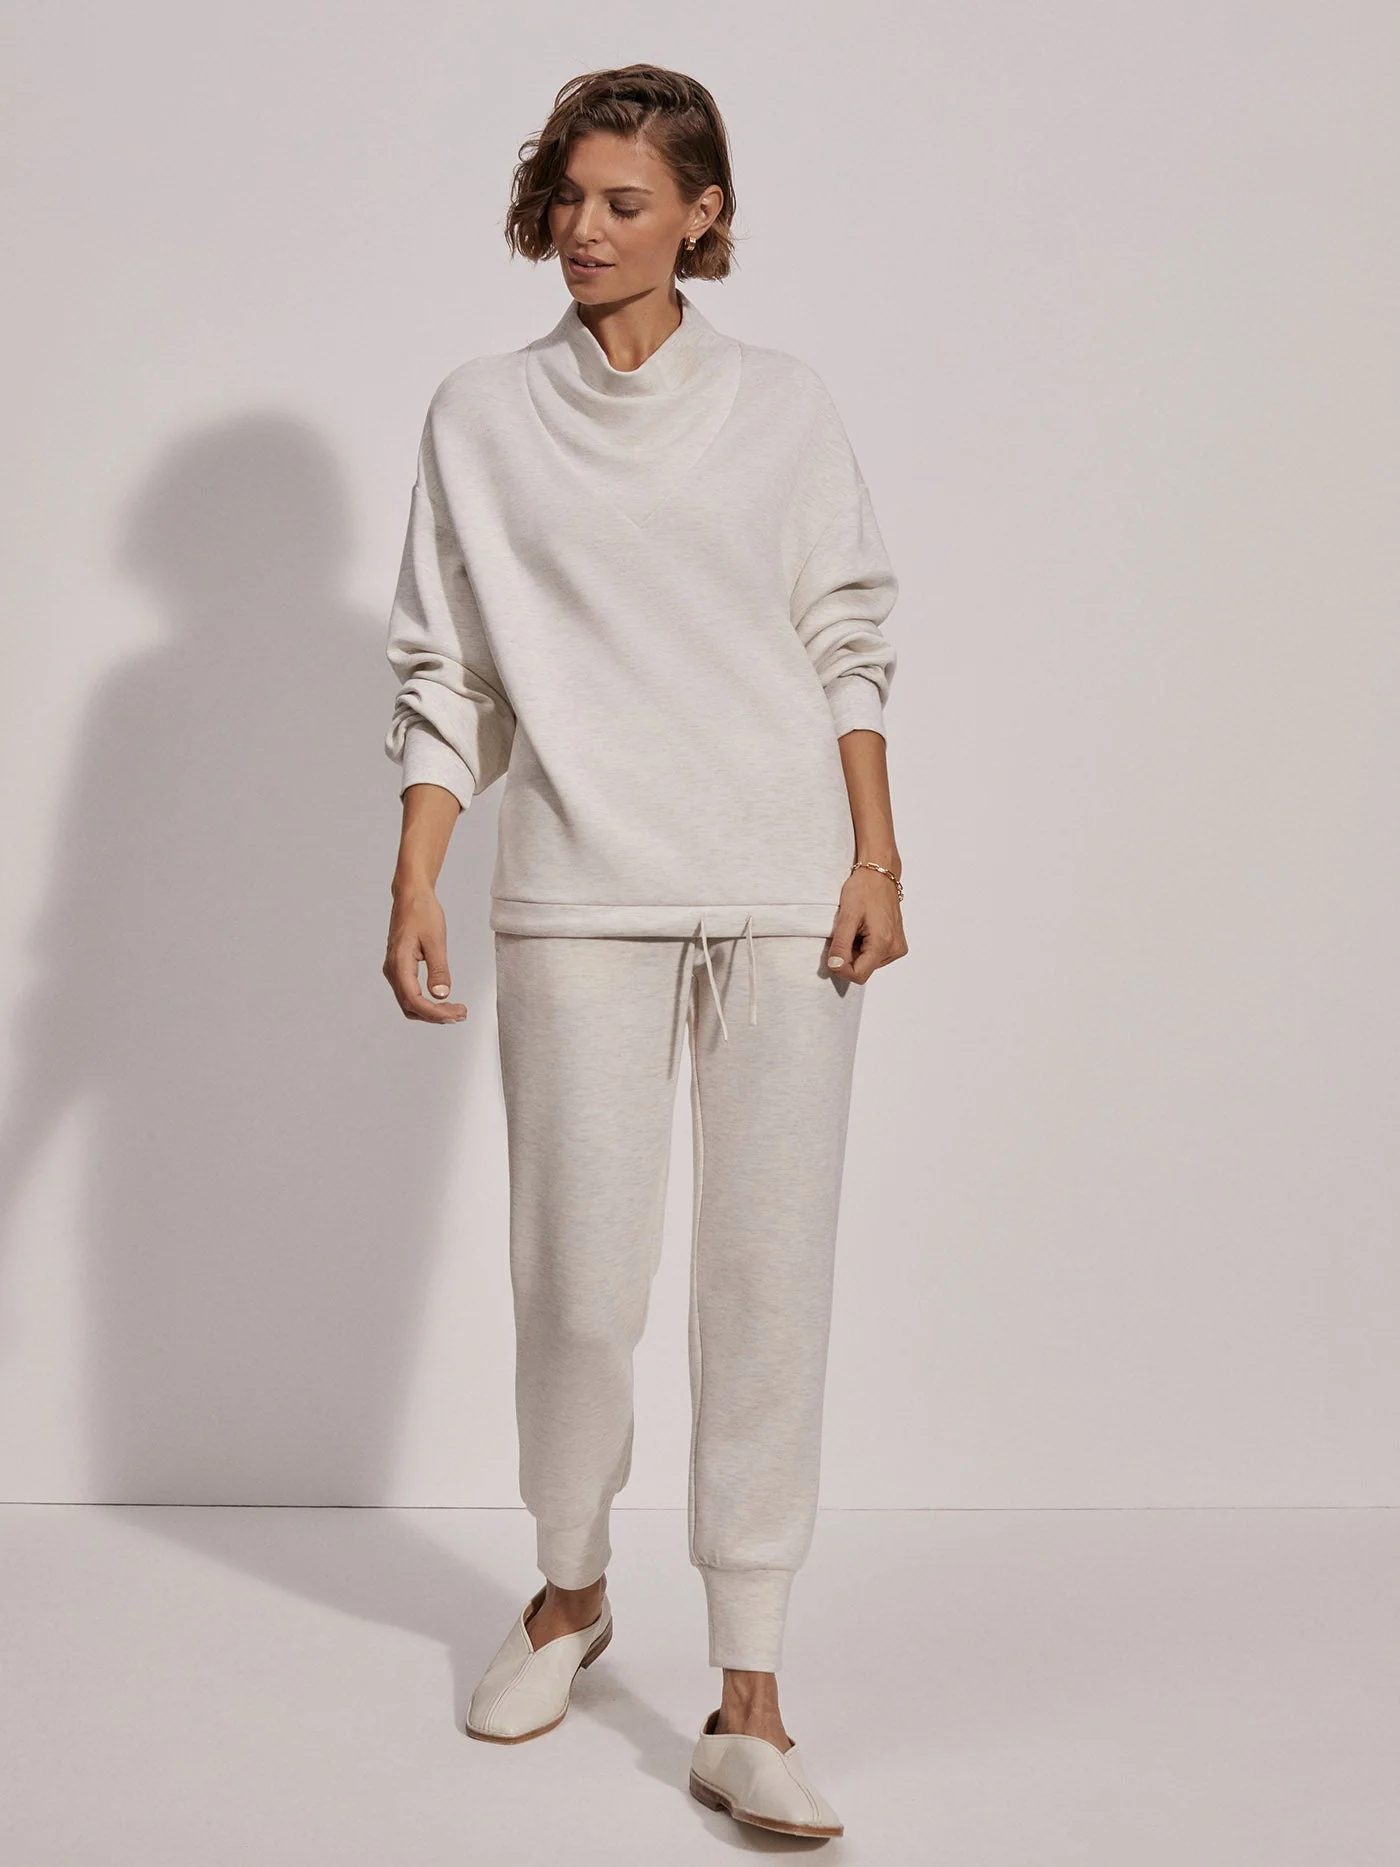 Varley Betsy Sweater - Ivory Marl Sleepwear - Other Sleepwear - Loungewear by Varley | Grace the Boutique